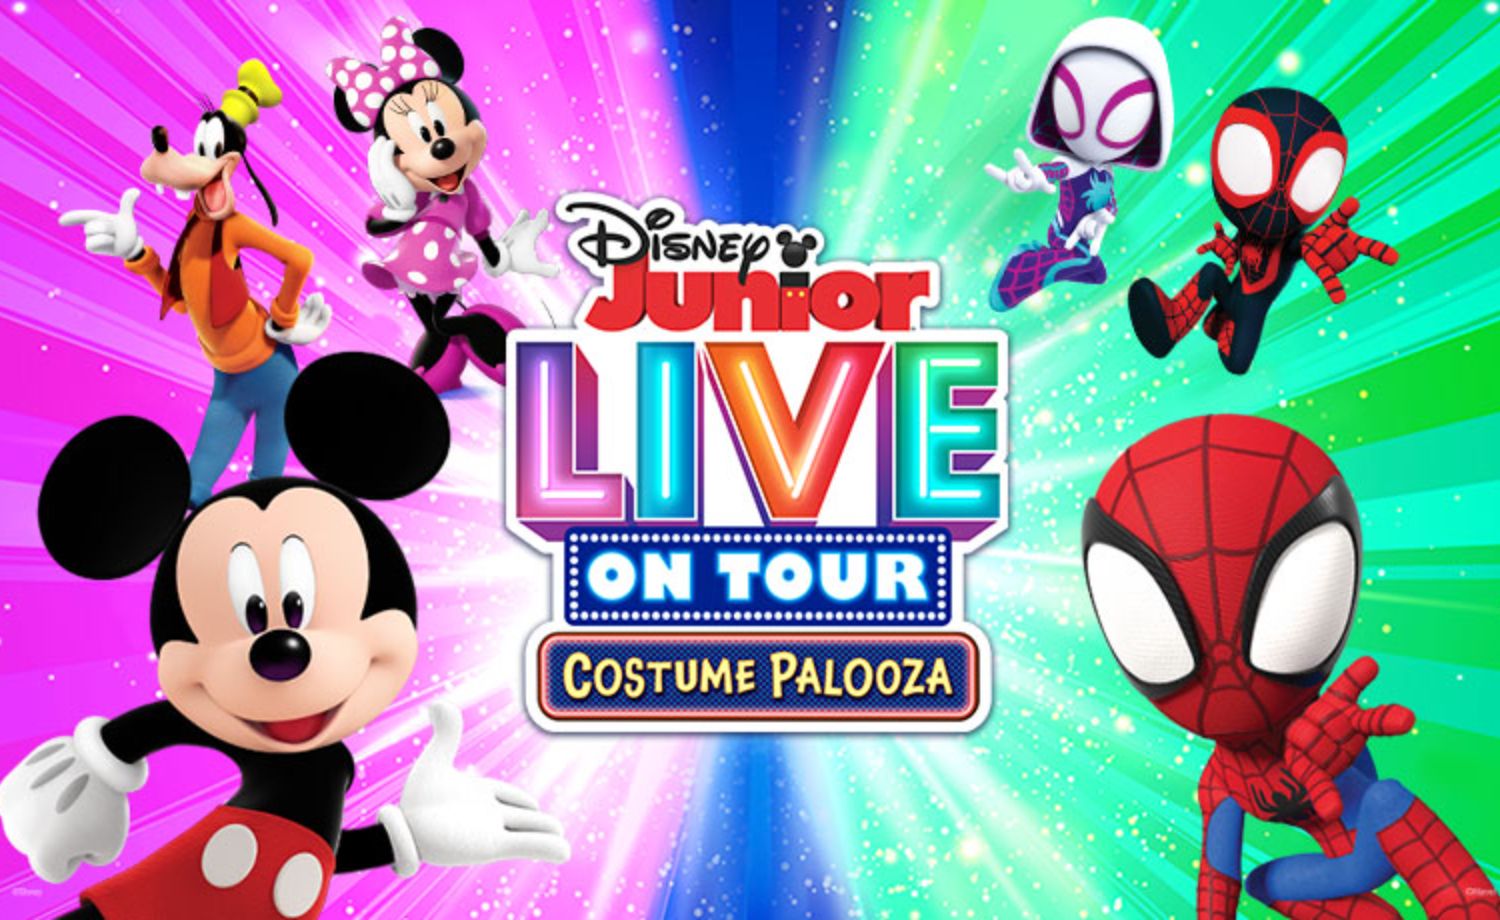 Disney Junior Live On Tour: Costume Palooza Sep 14